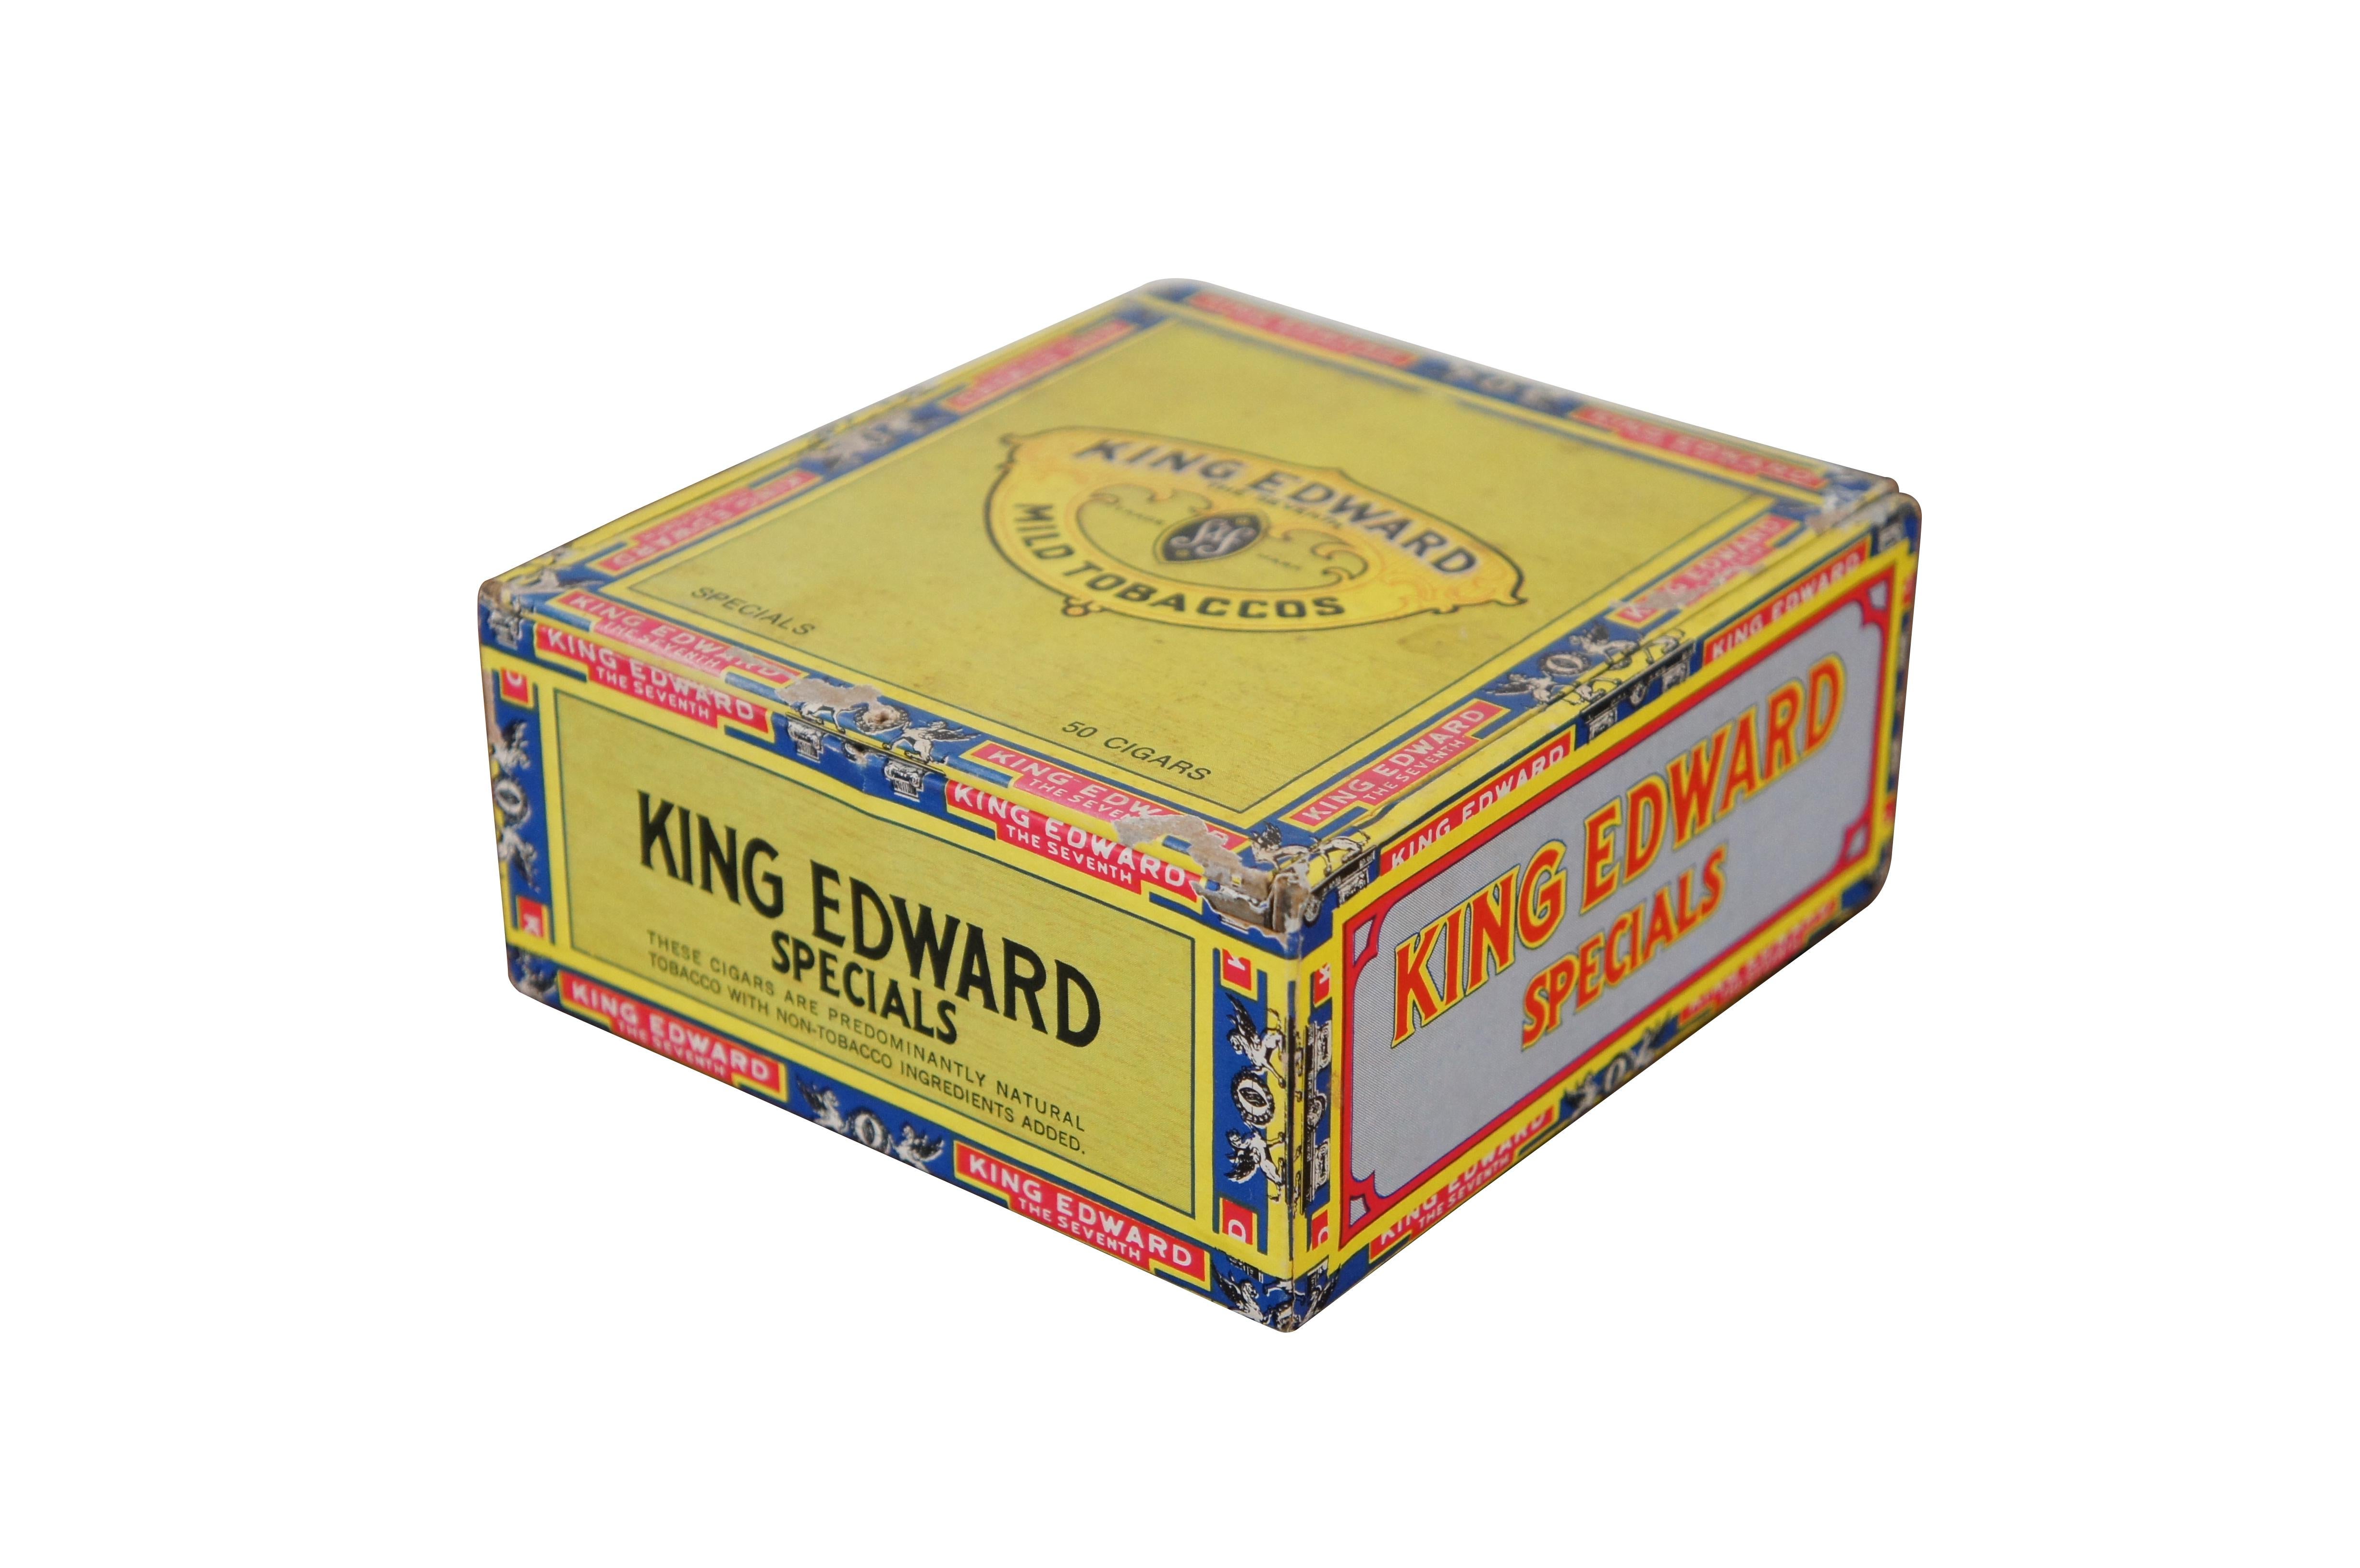 Vintage King Edward the seventh cigar ad keepsake trinket box.

Dimensions:
4.5